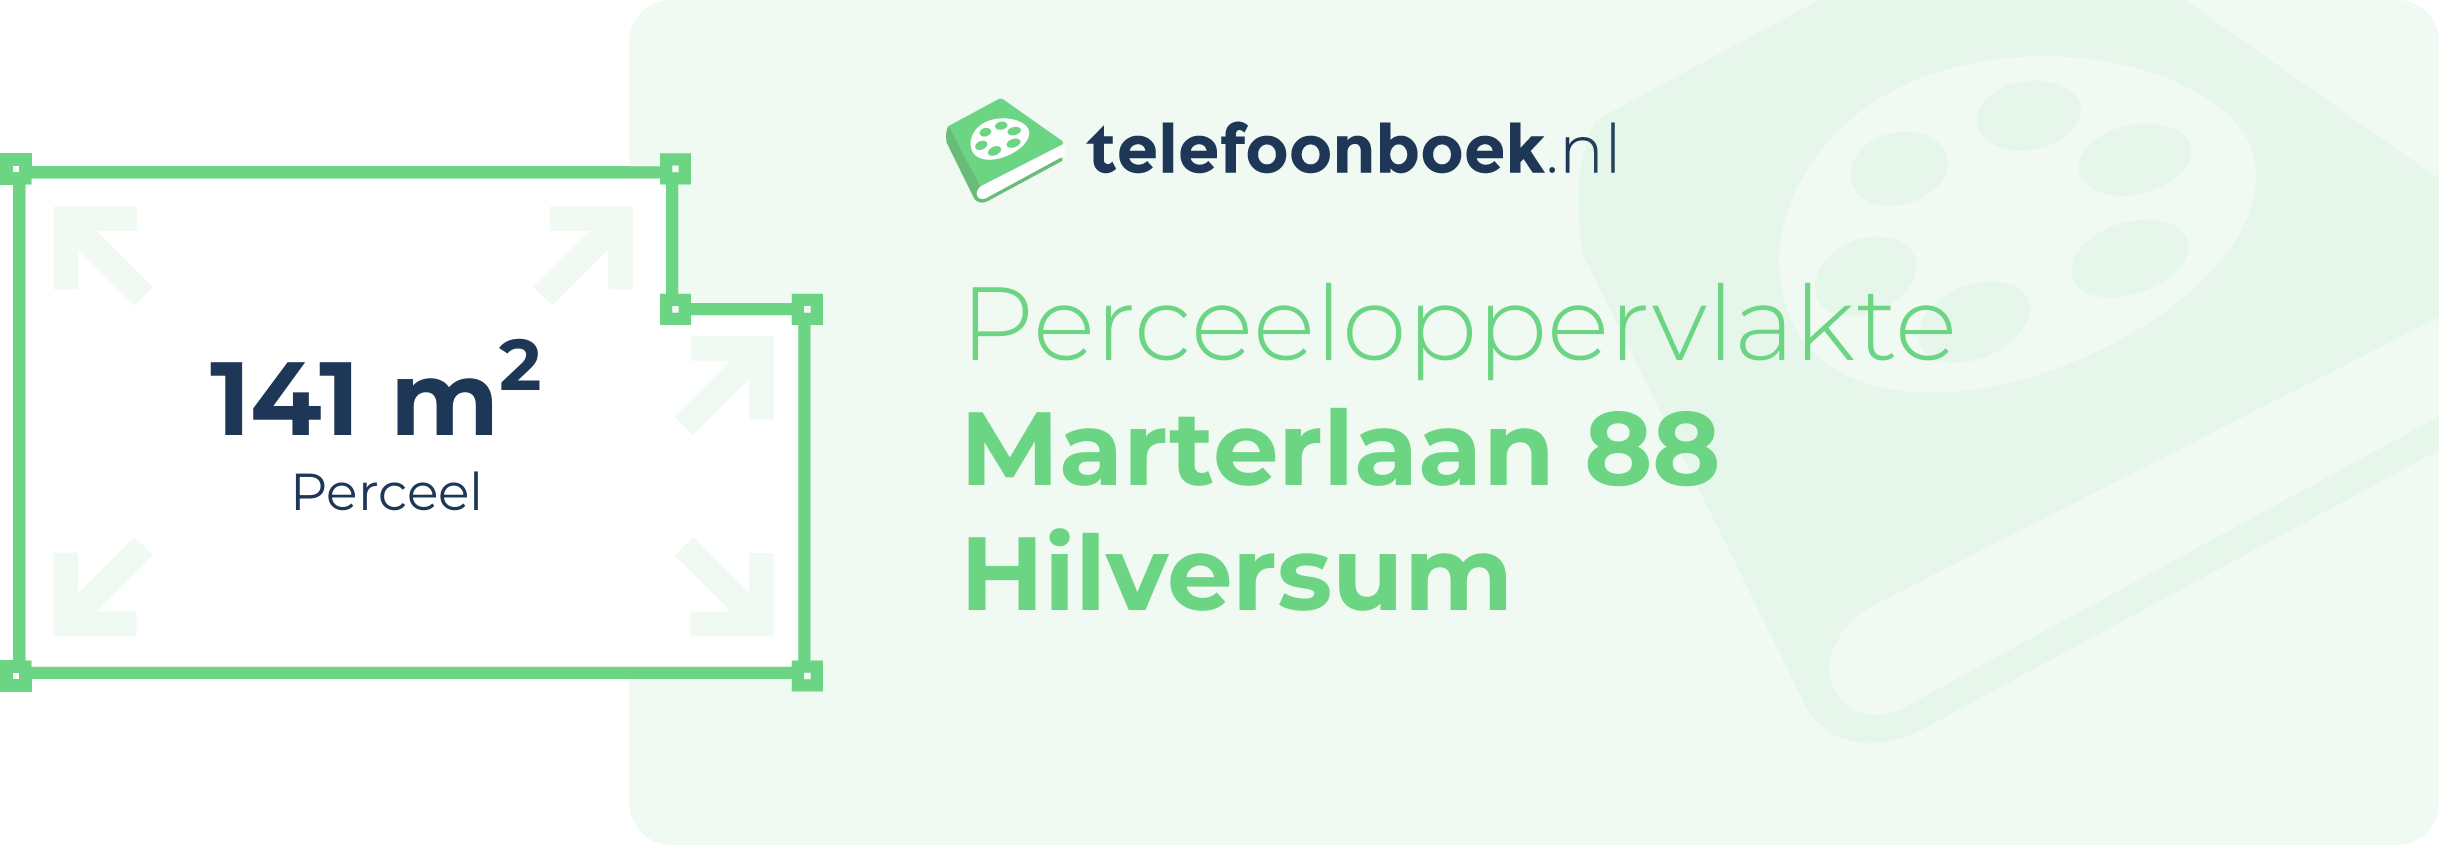 Perceeloppervlakte Marterlaan 88 Hilversum